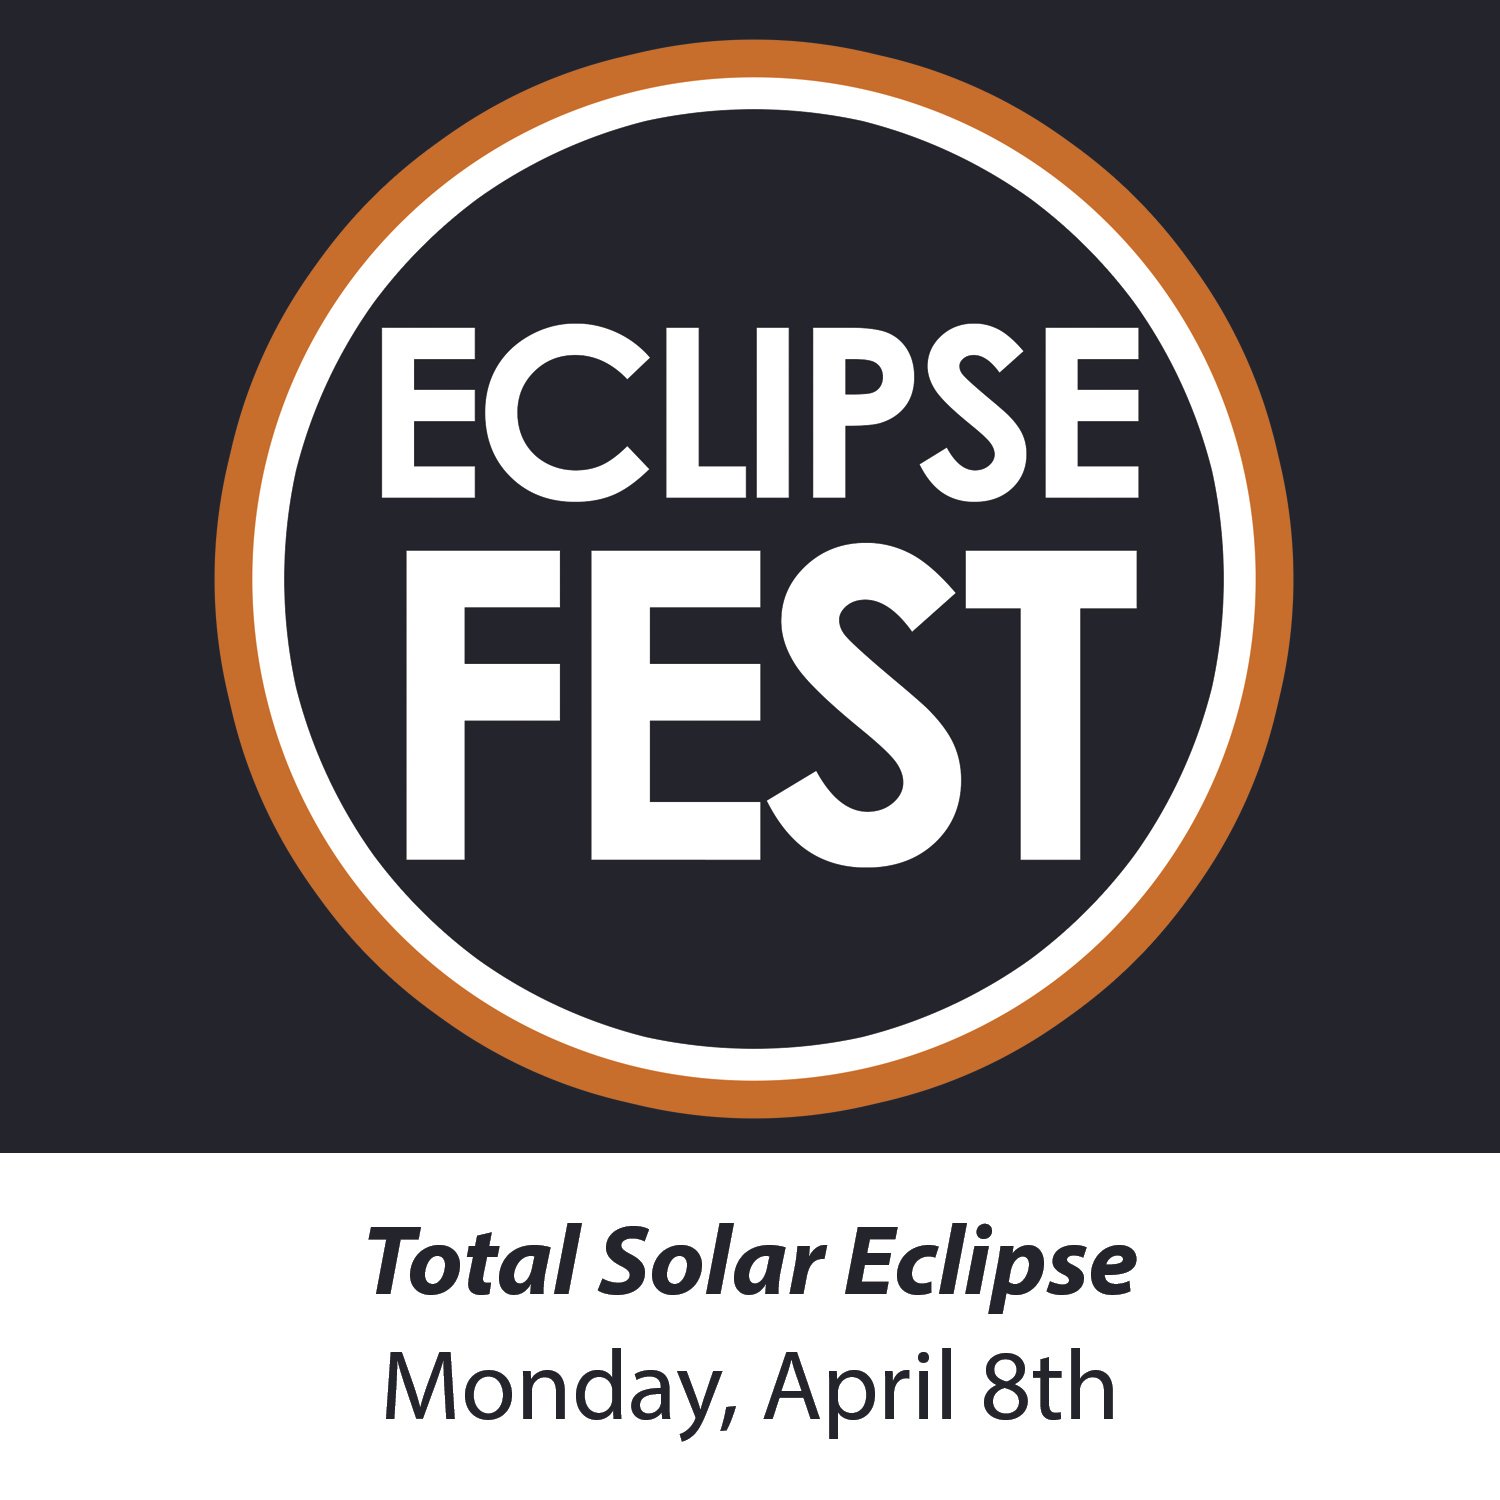 eclipse fest sponsorship icon.jpg